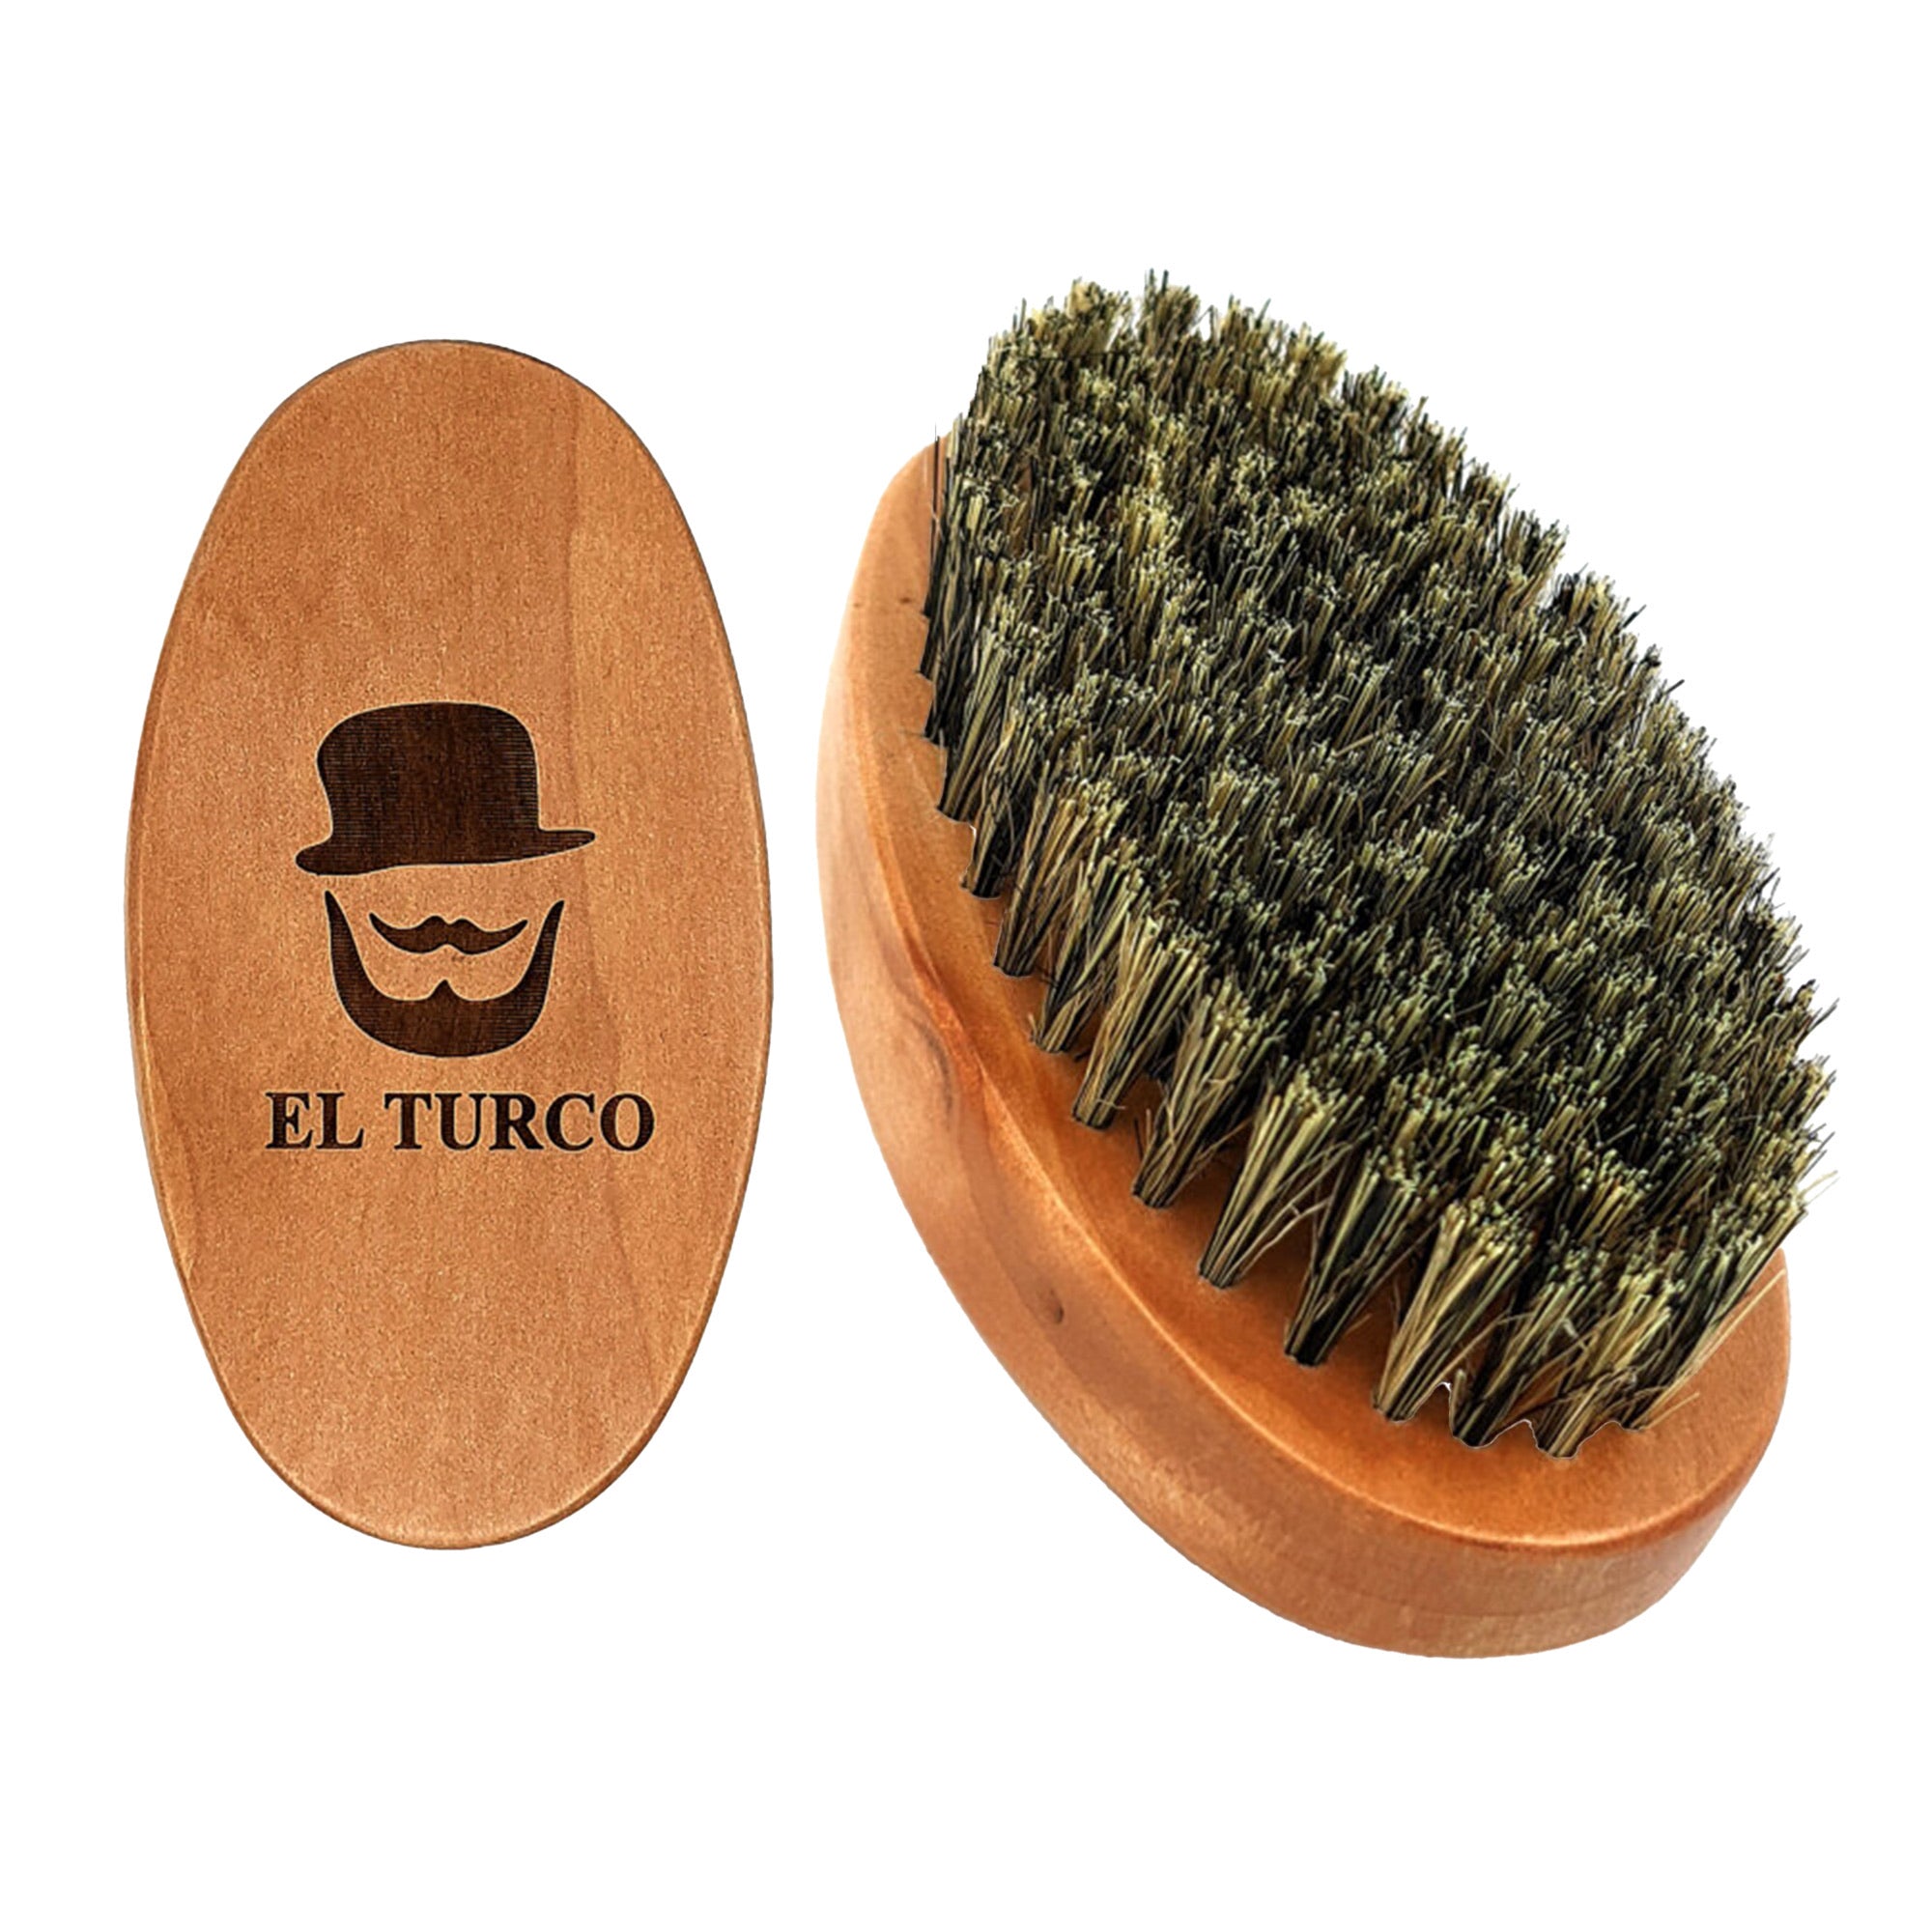 El Turco - Oval Style Fade Brush 11x6cm